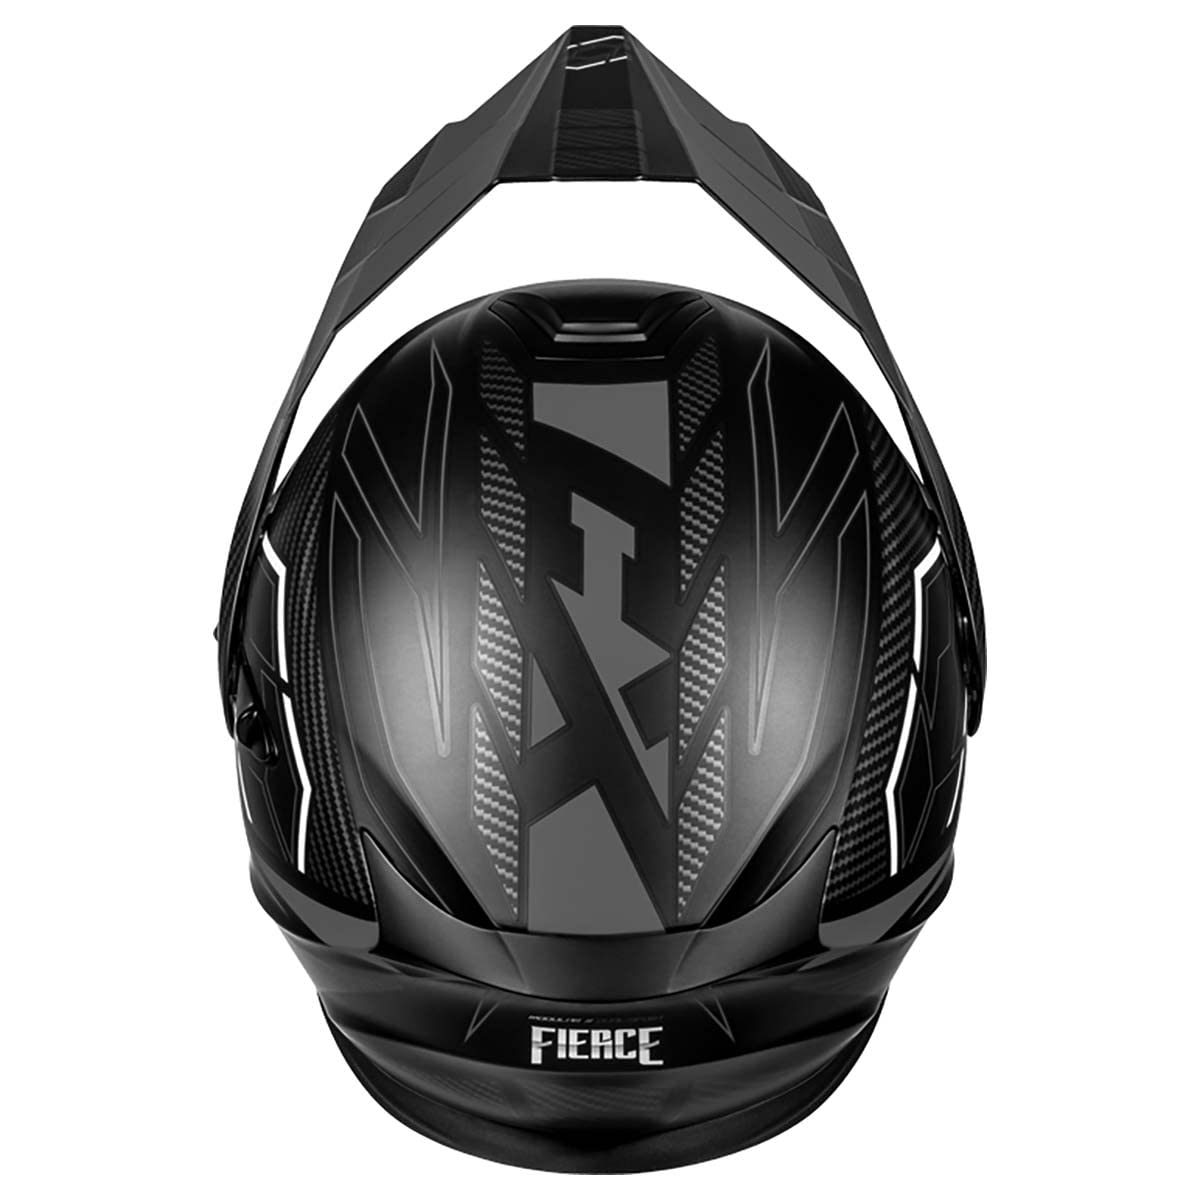 Castle X CX950 V2 Fierce Modular Electric Snow Helmet